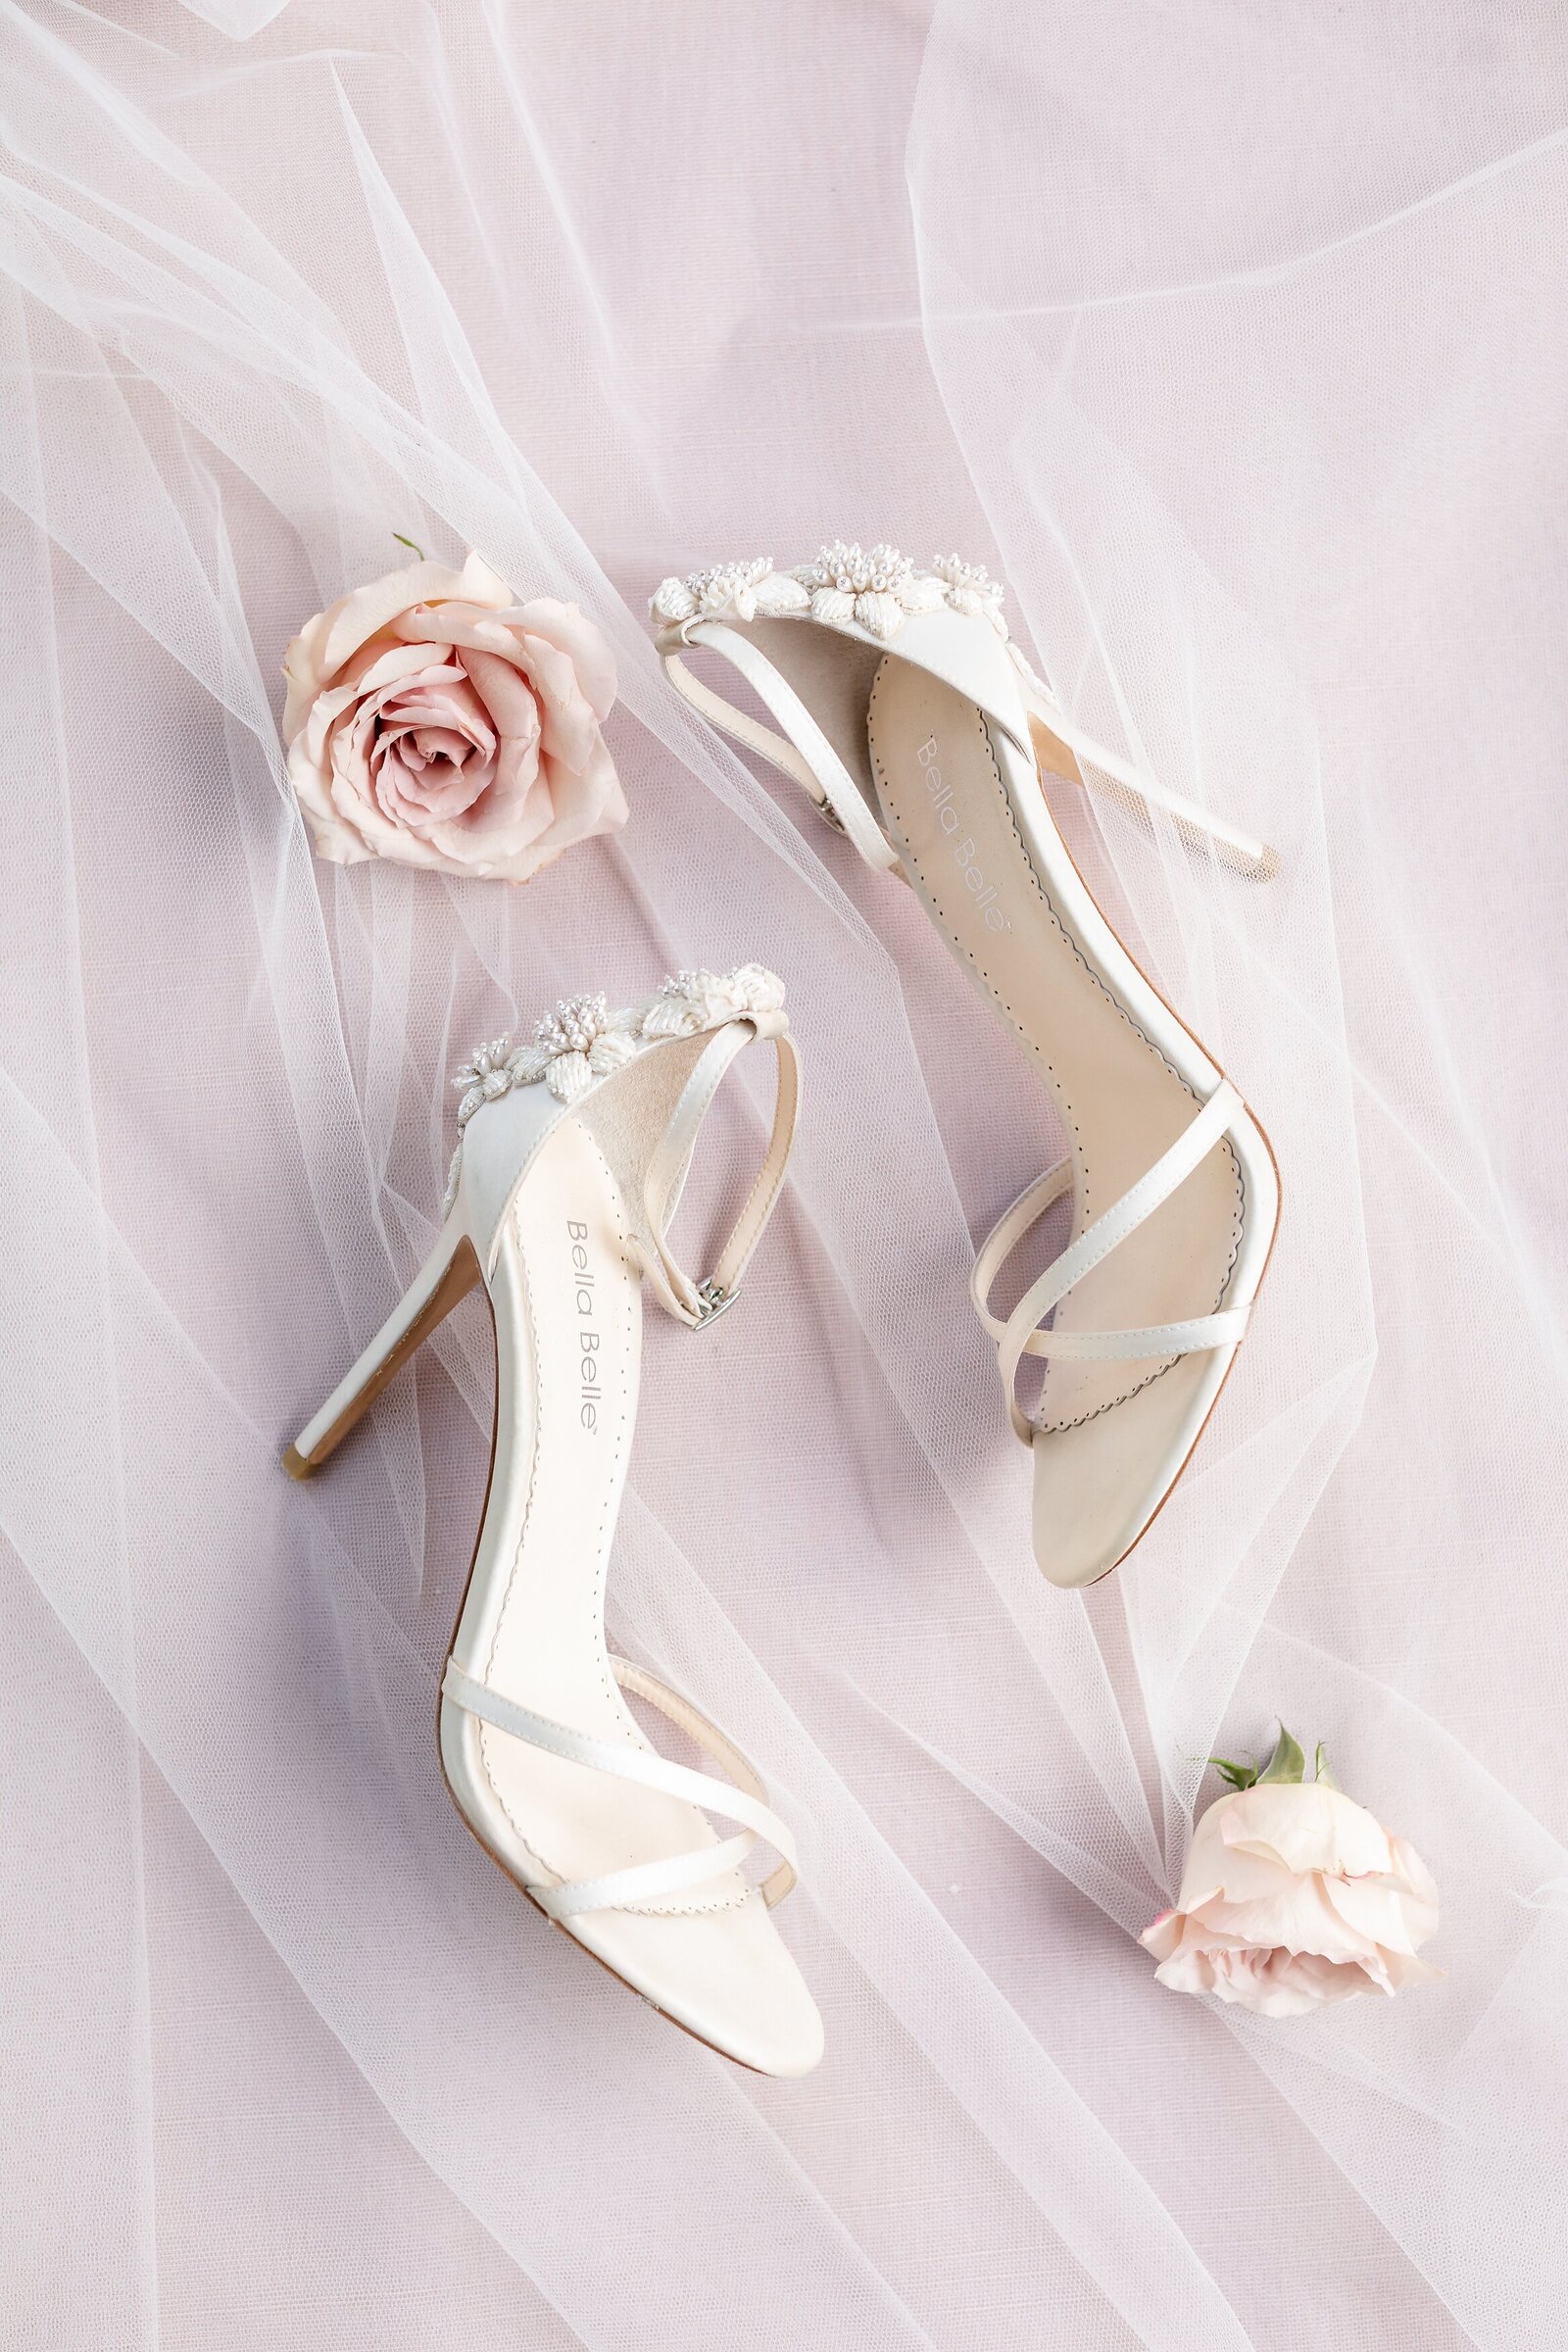 Graydon-hall-manor-estate-wedding-shoes